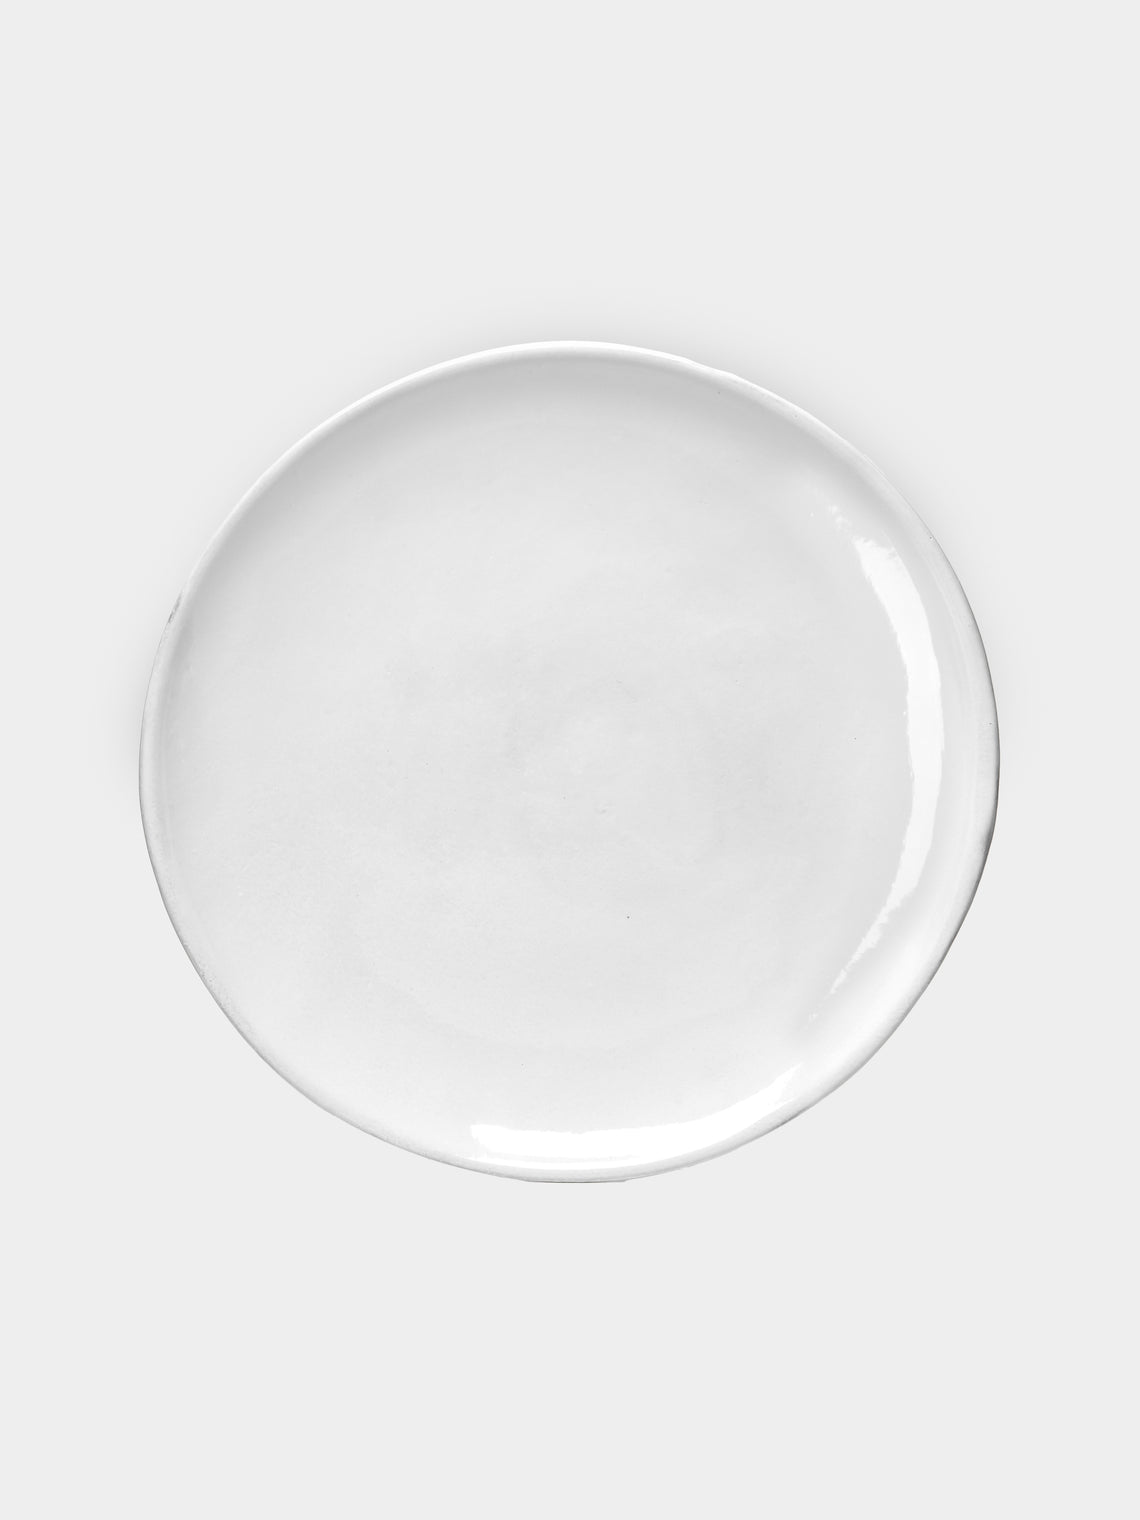 Astier de Villatte - Rien Dinner Plate -  - ABASK - 